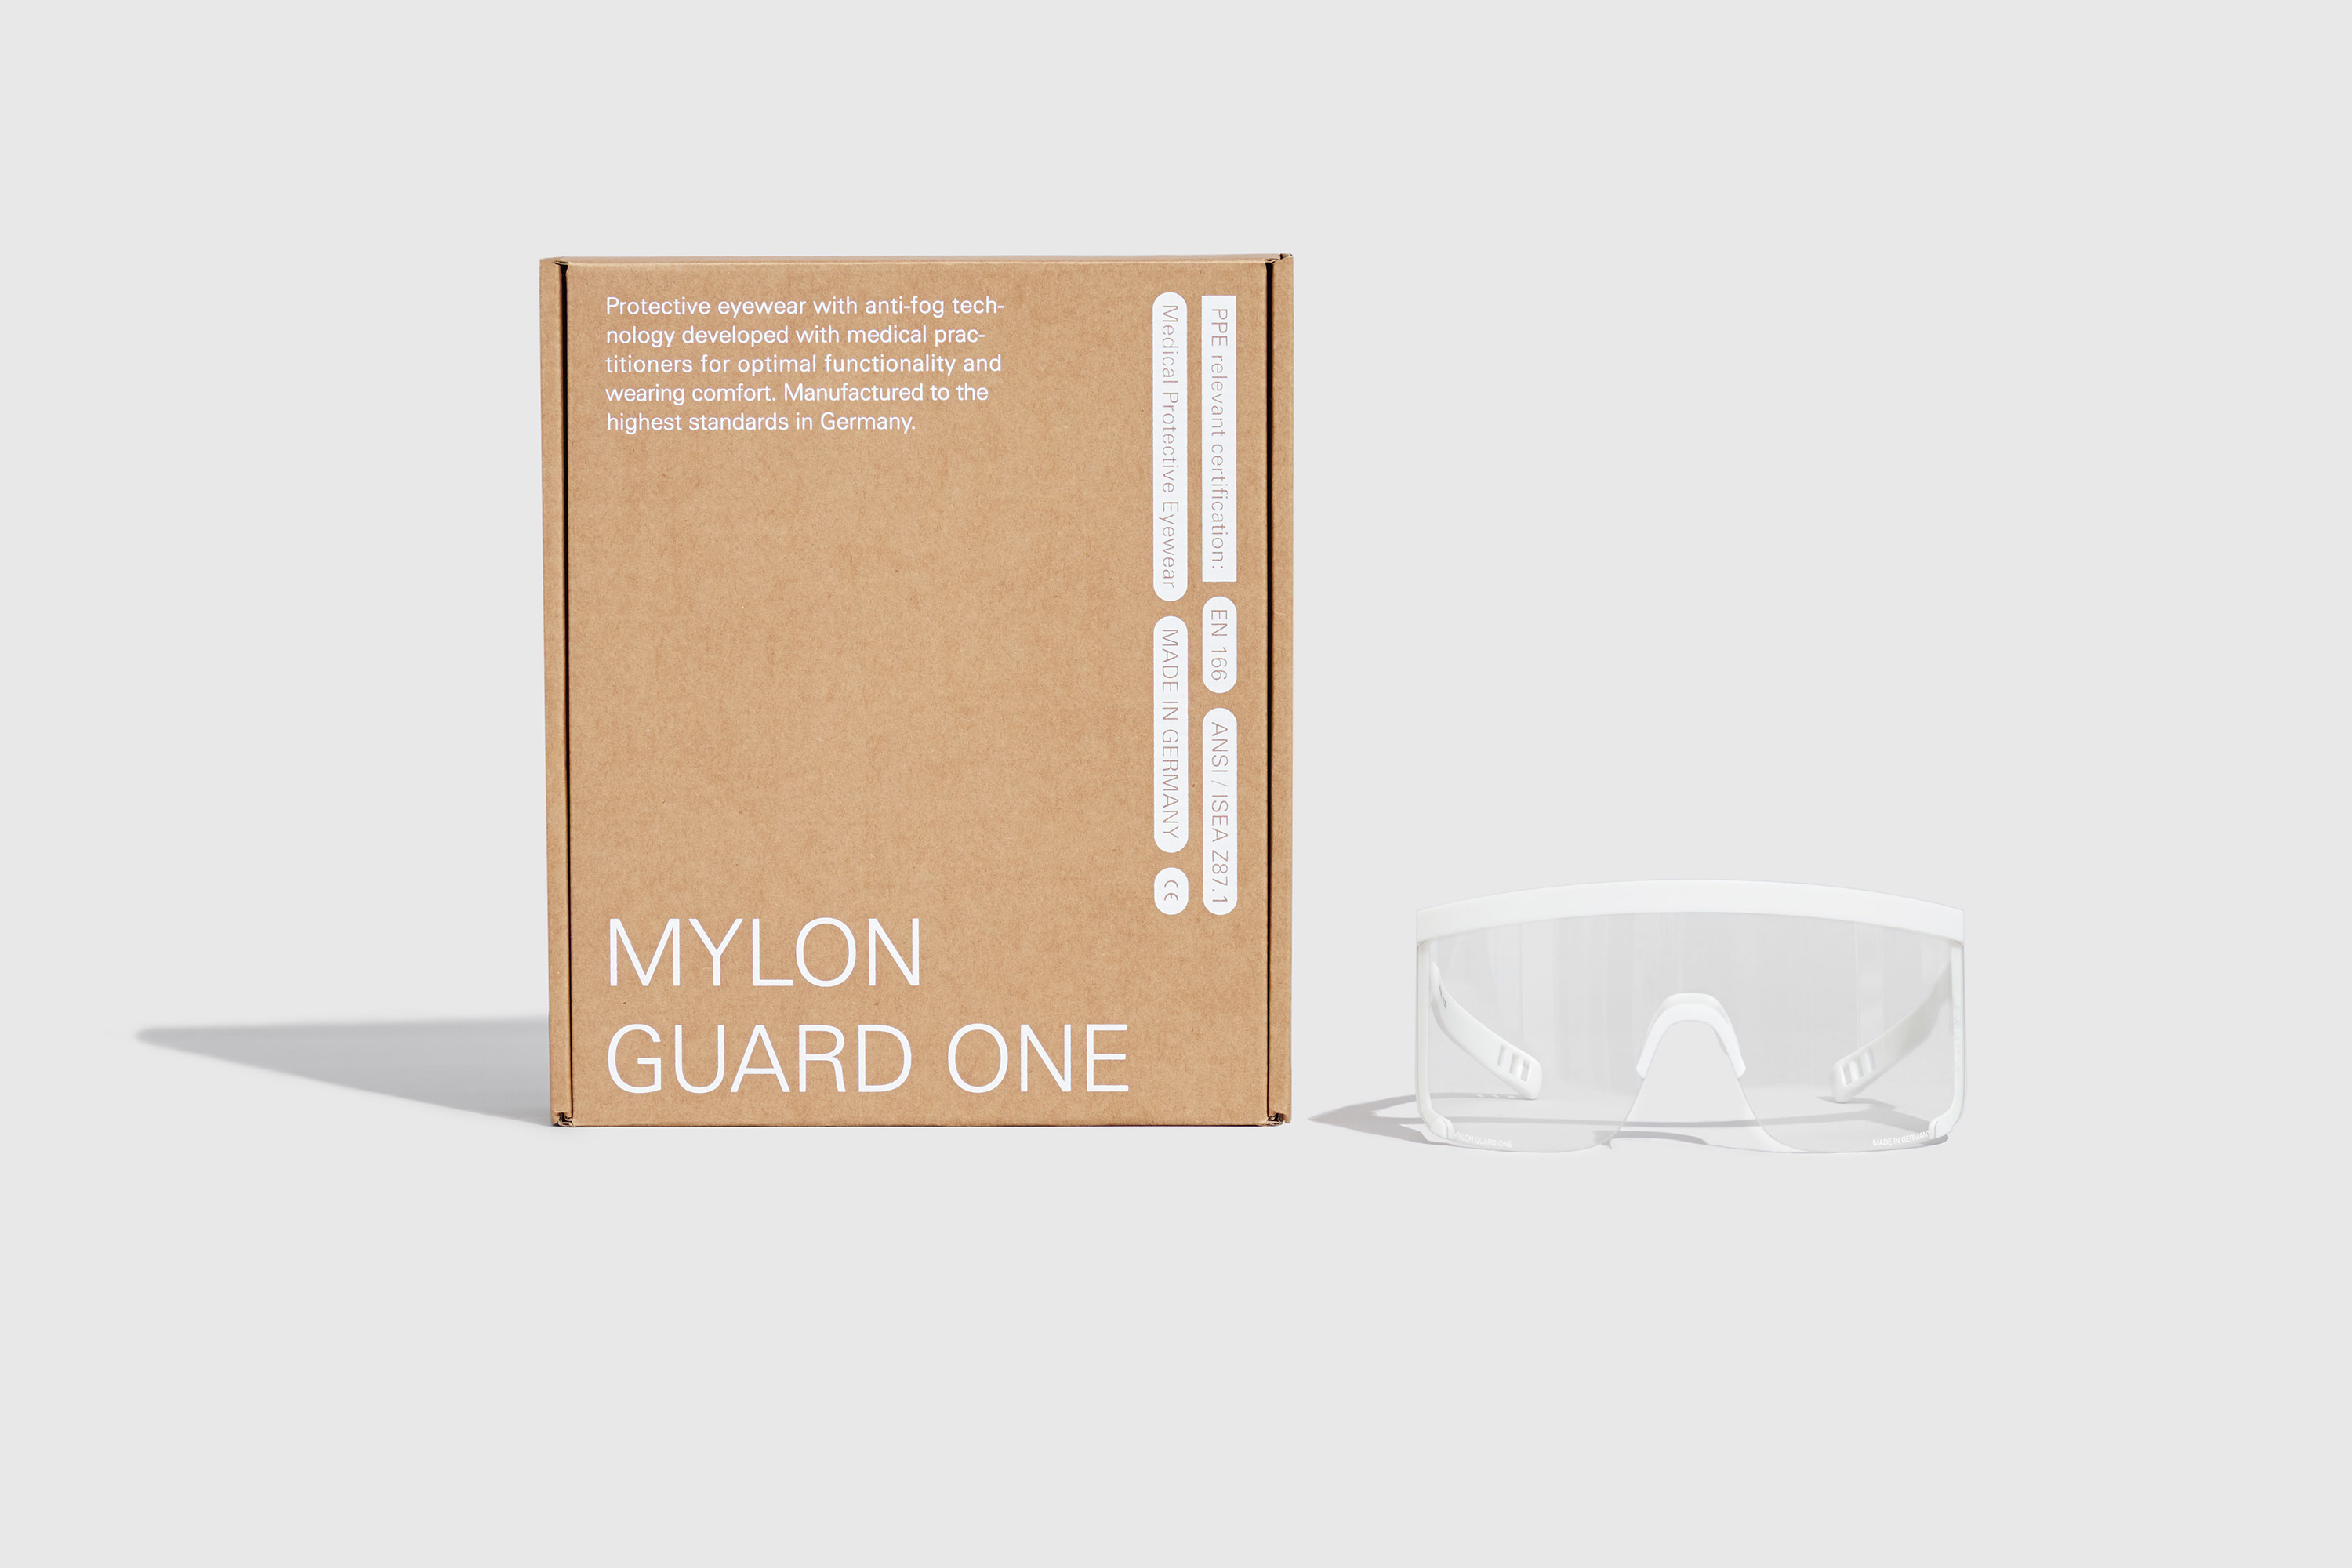 MYKITA - Power of white space – MYLON GUARD ONE featured in Tush